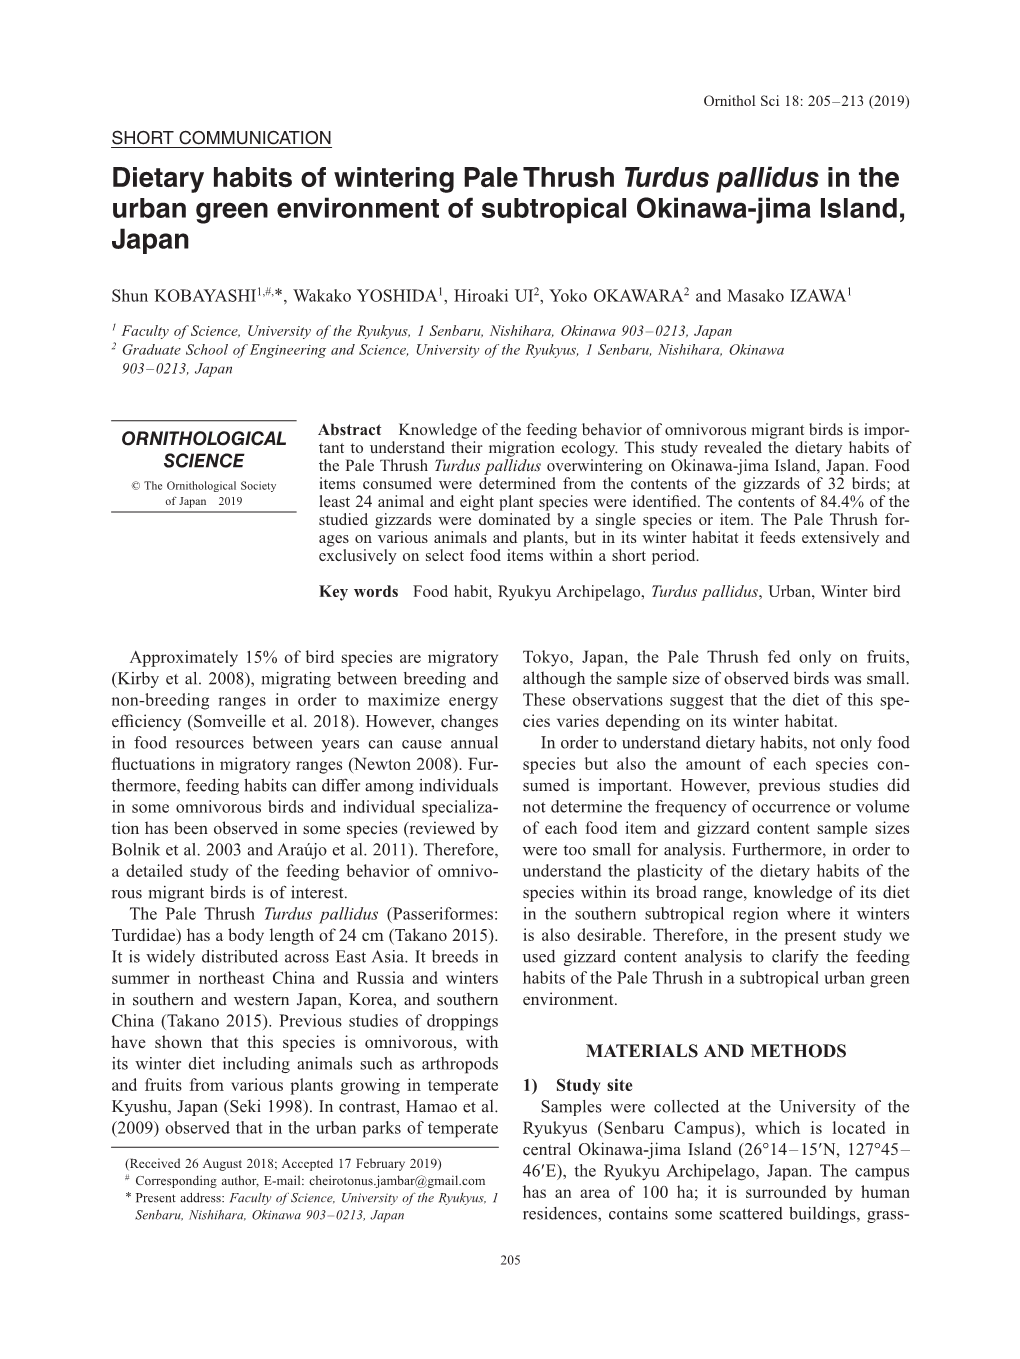 Dietary Habits of Wintering Pale Thrush Turdus Pallidus in the Urban Green Environment of Subtropical Okinawa-Jima Island, Japan